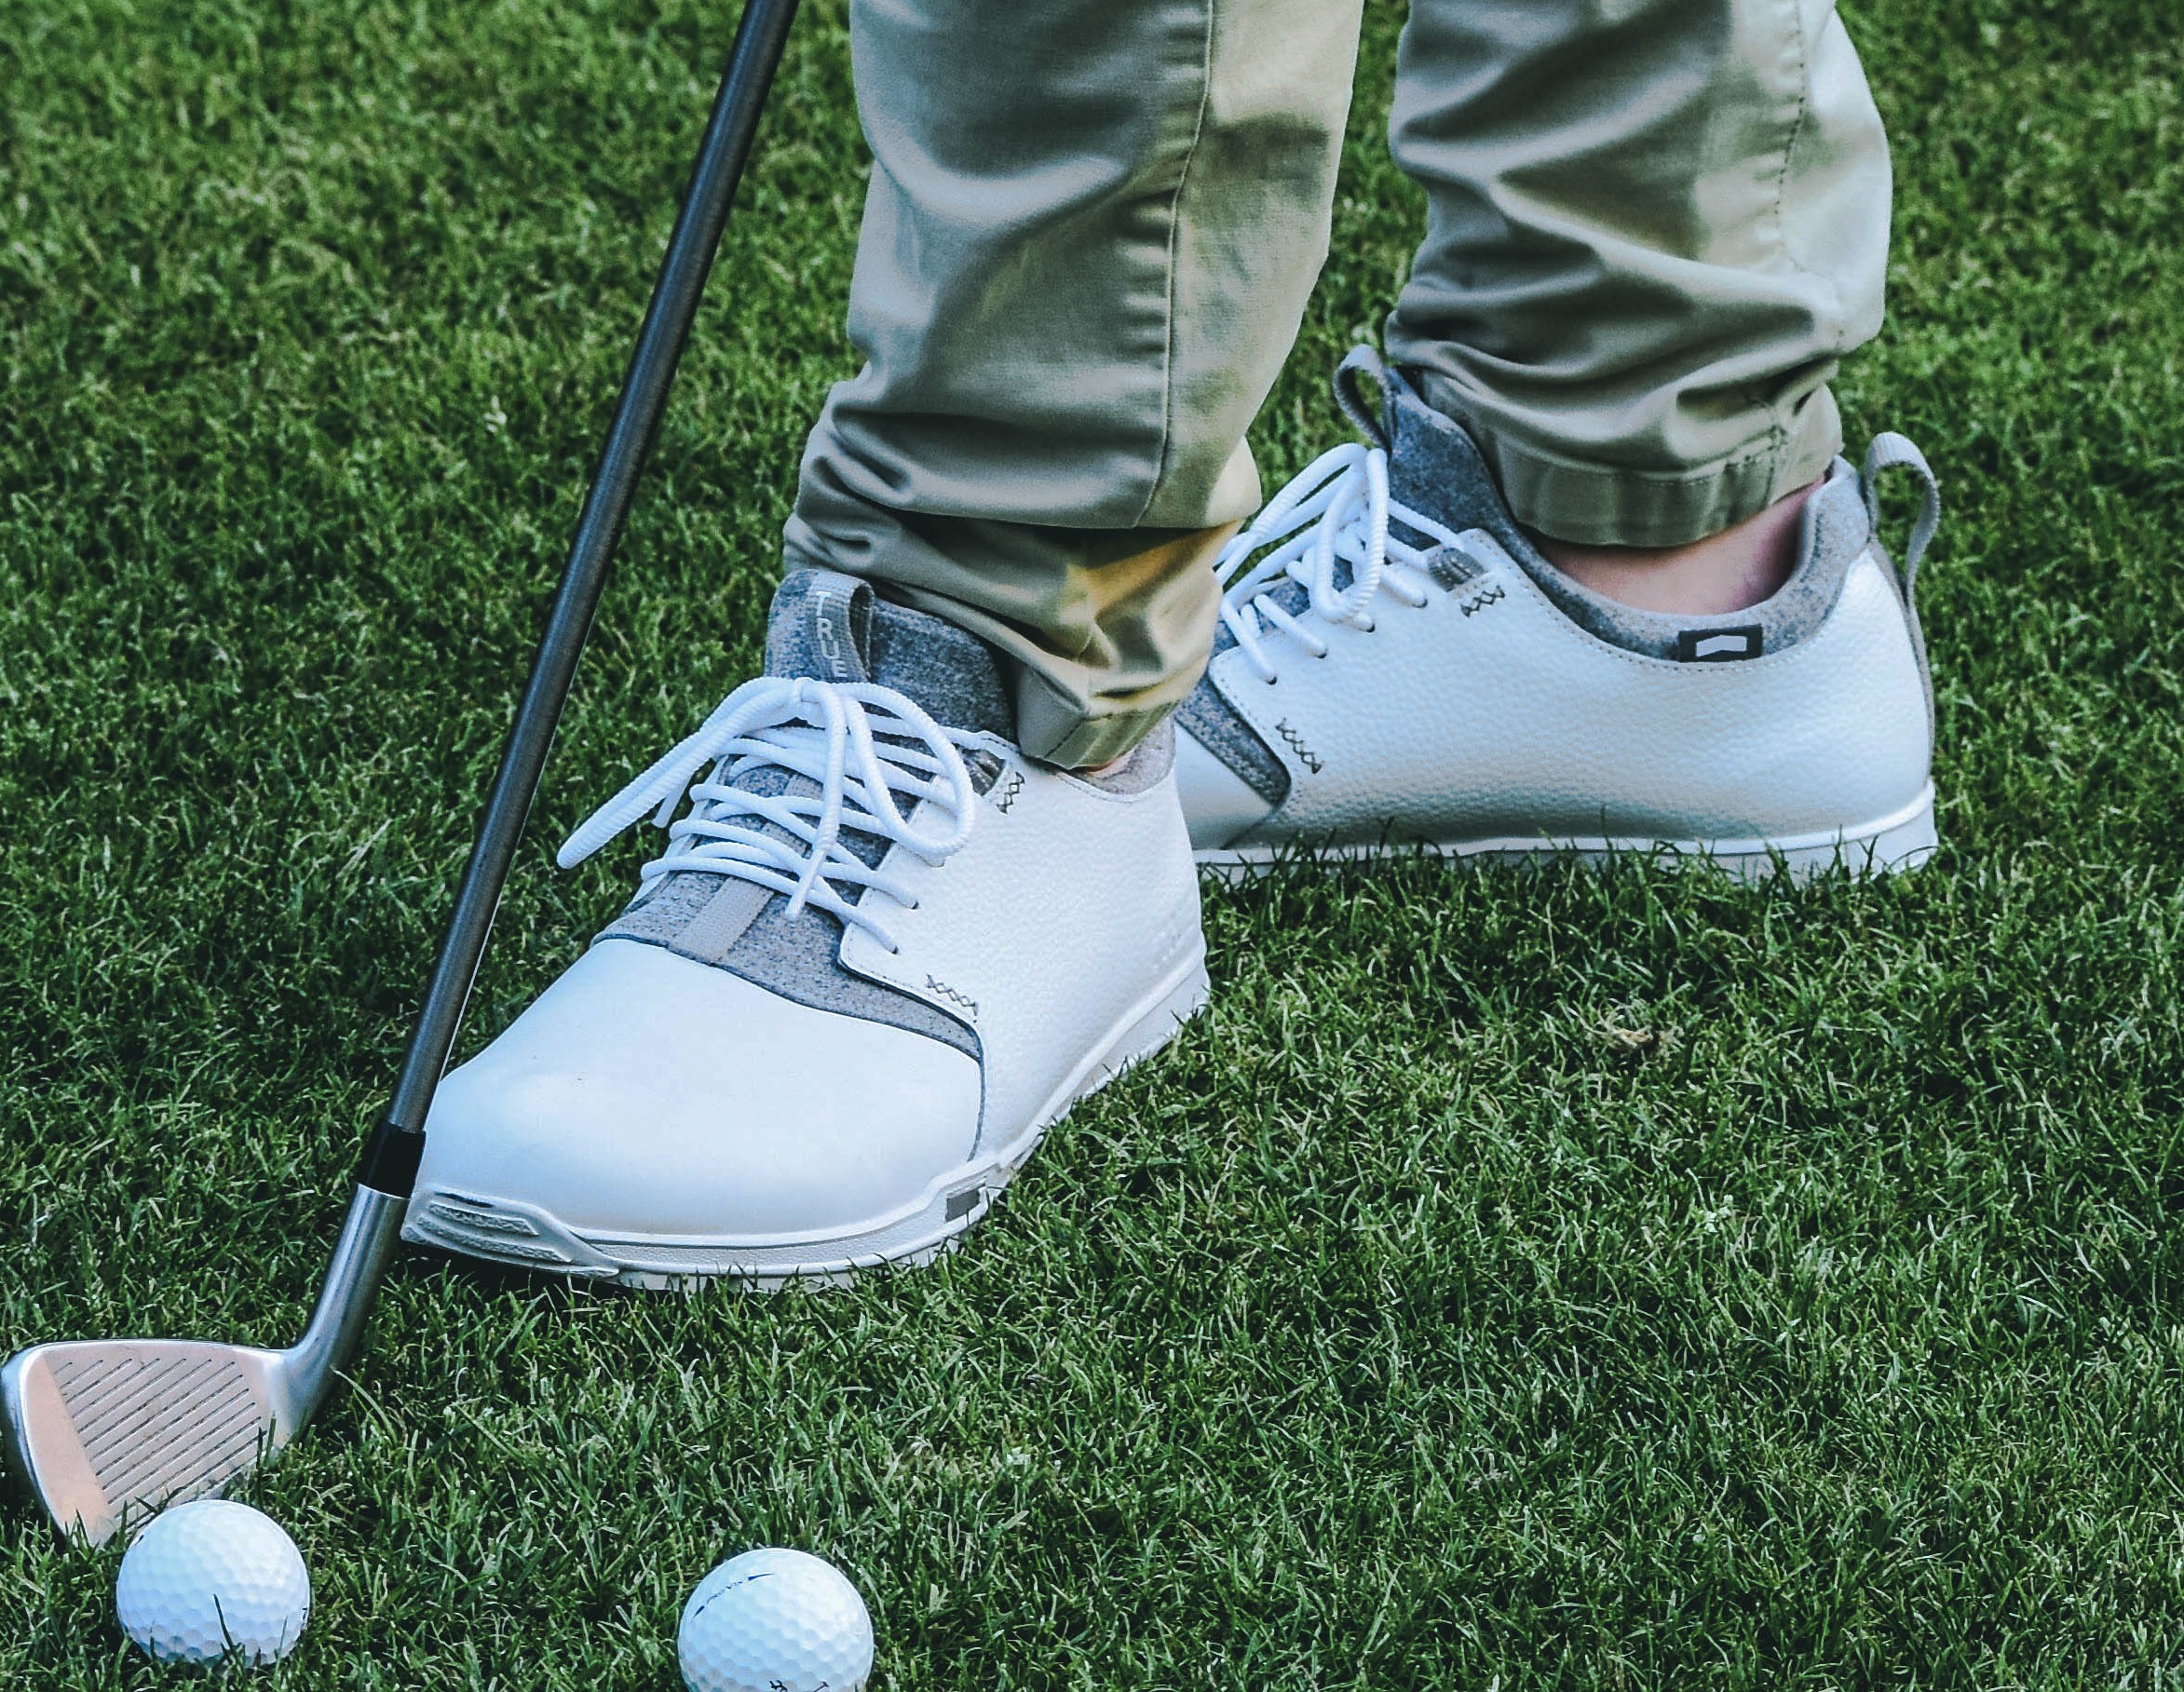 True Linkswear goes back to its spikeless roots GolfWRX